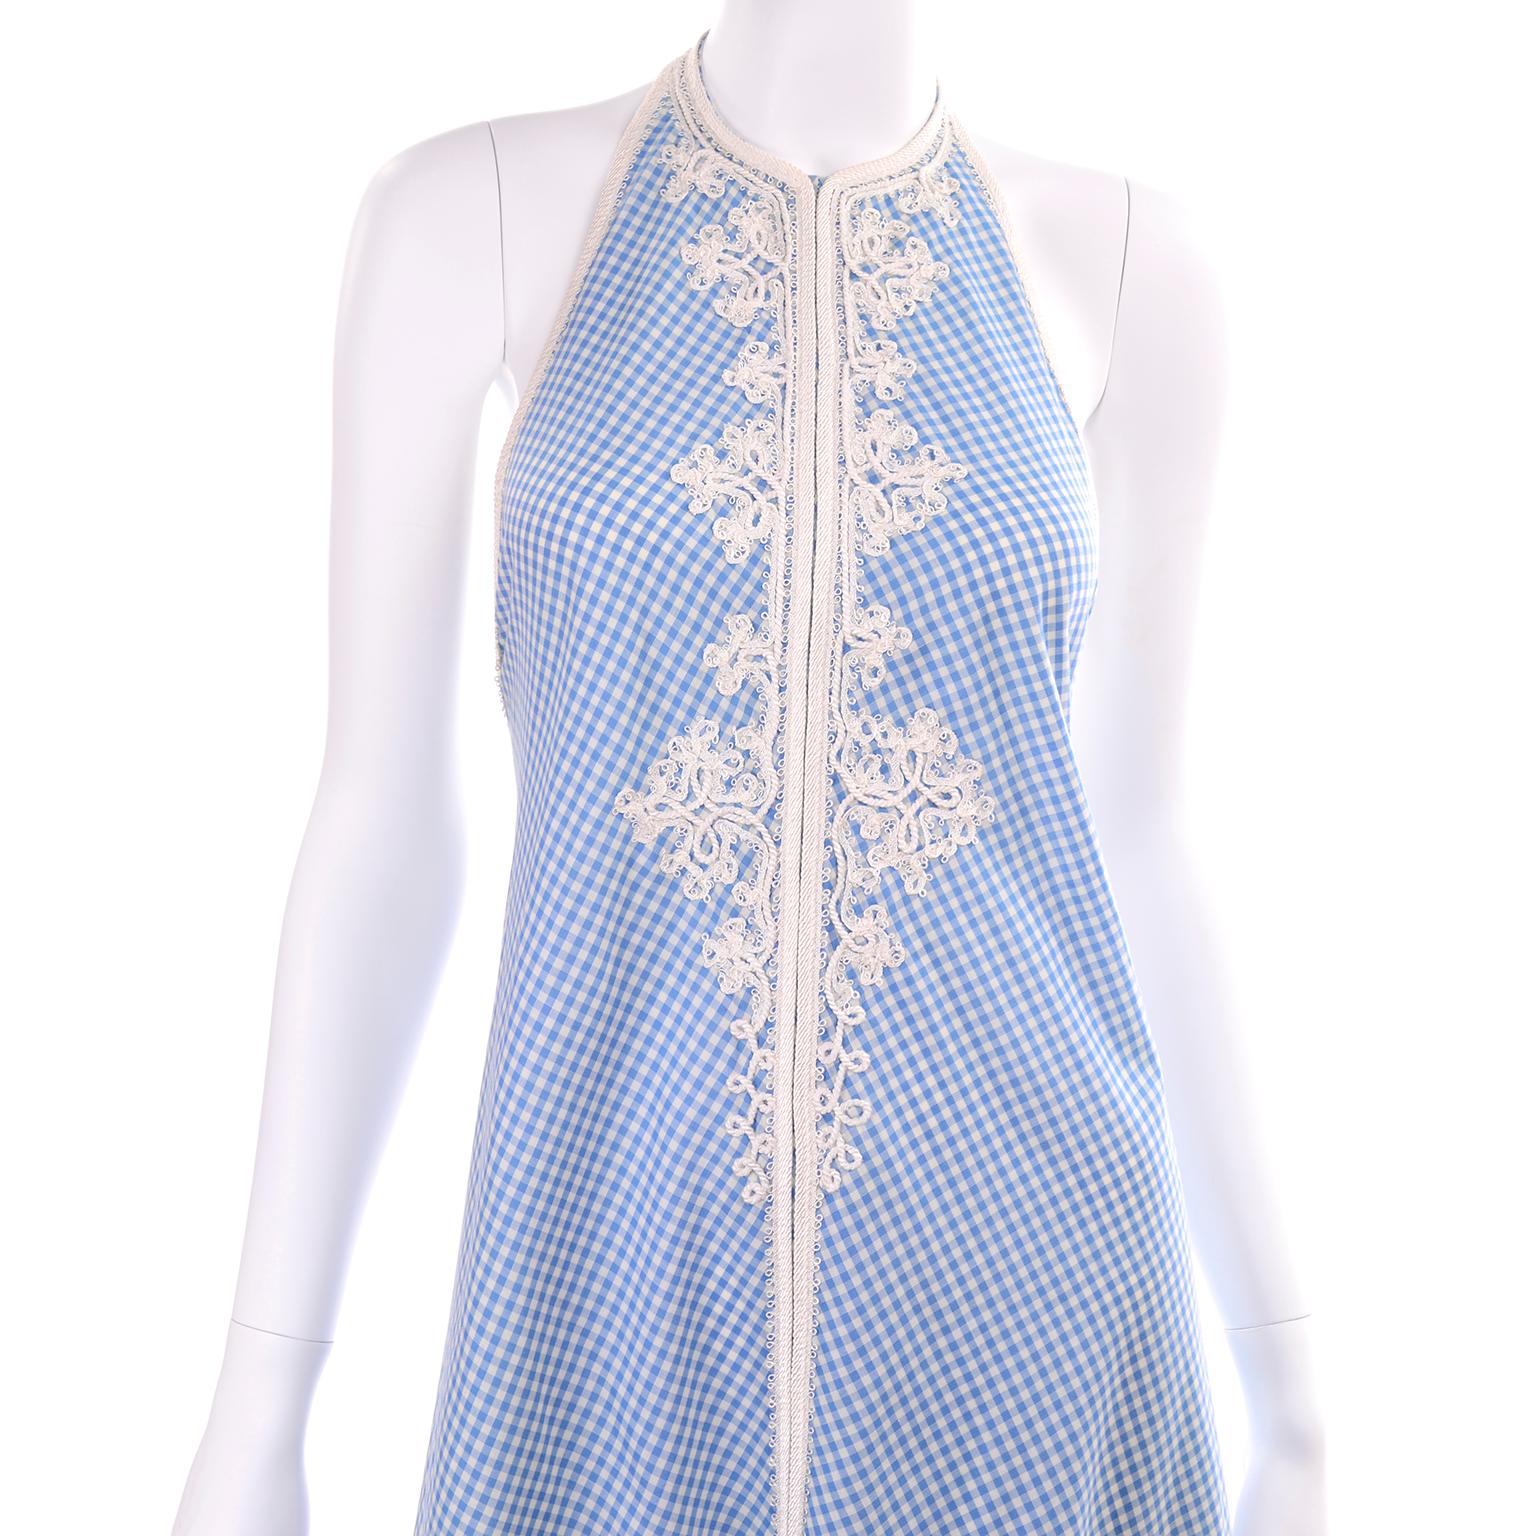 1970s Anne Klein Vintage Halter Dress in Blue and White Gingham Check w applique 6